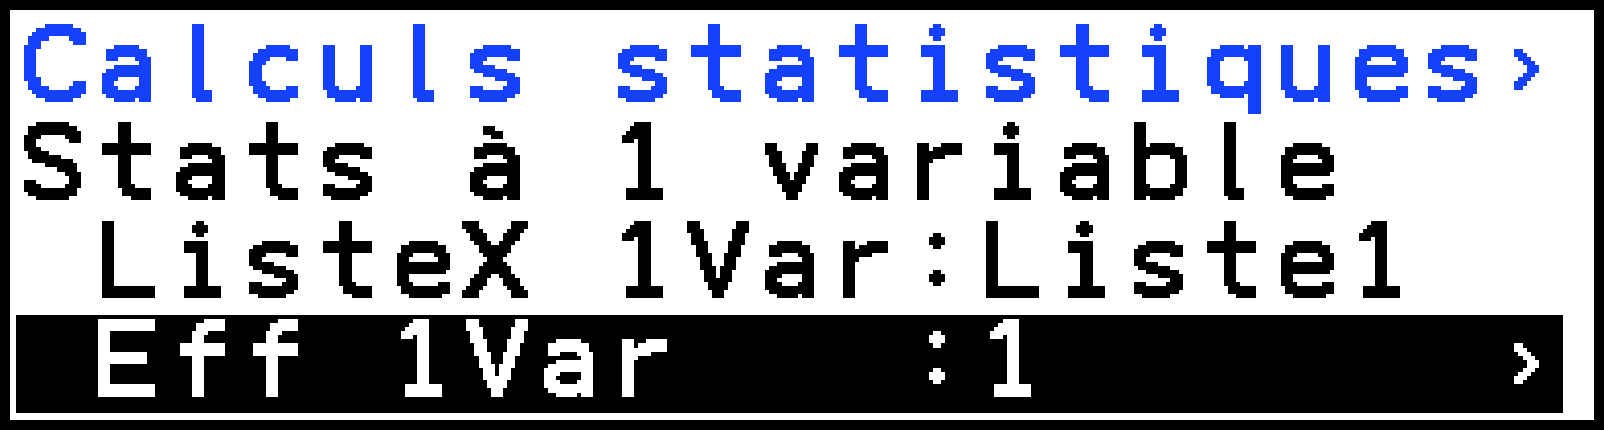 CY875_Statistics_Inputting Data_2_1